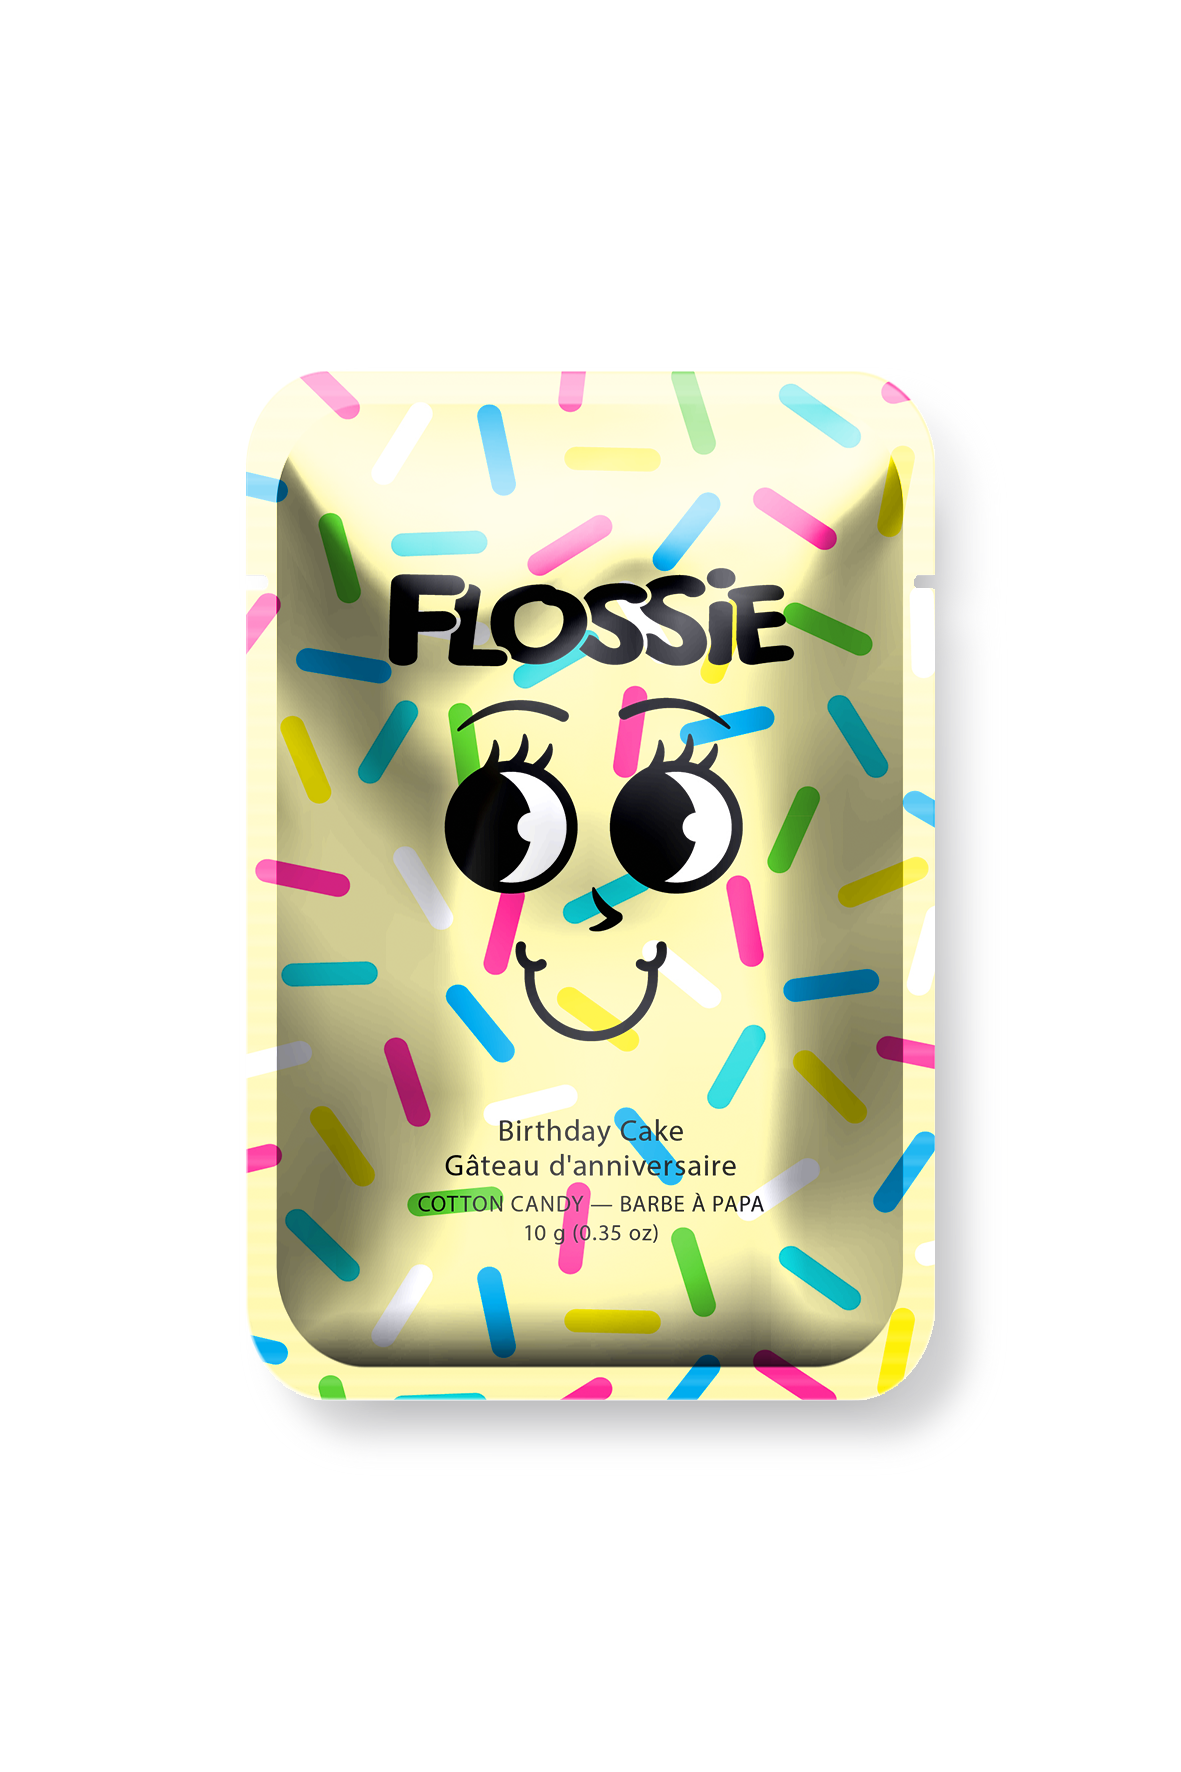 Flossie - Birthday Cake Cotton Candy